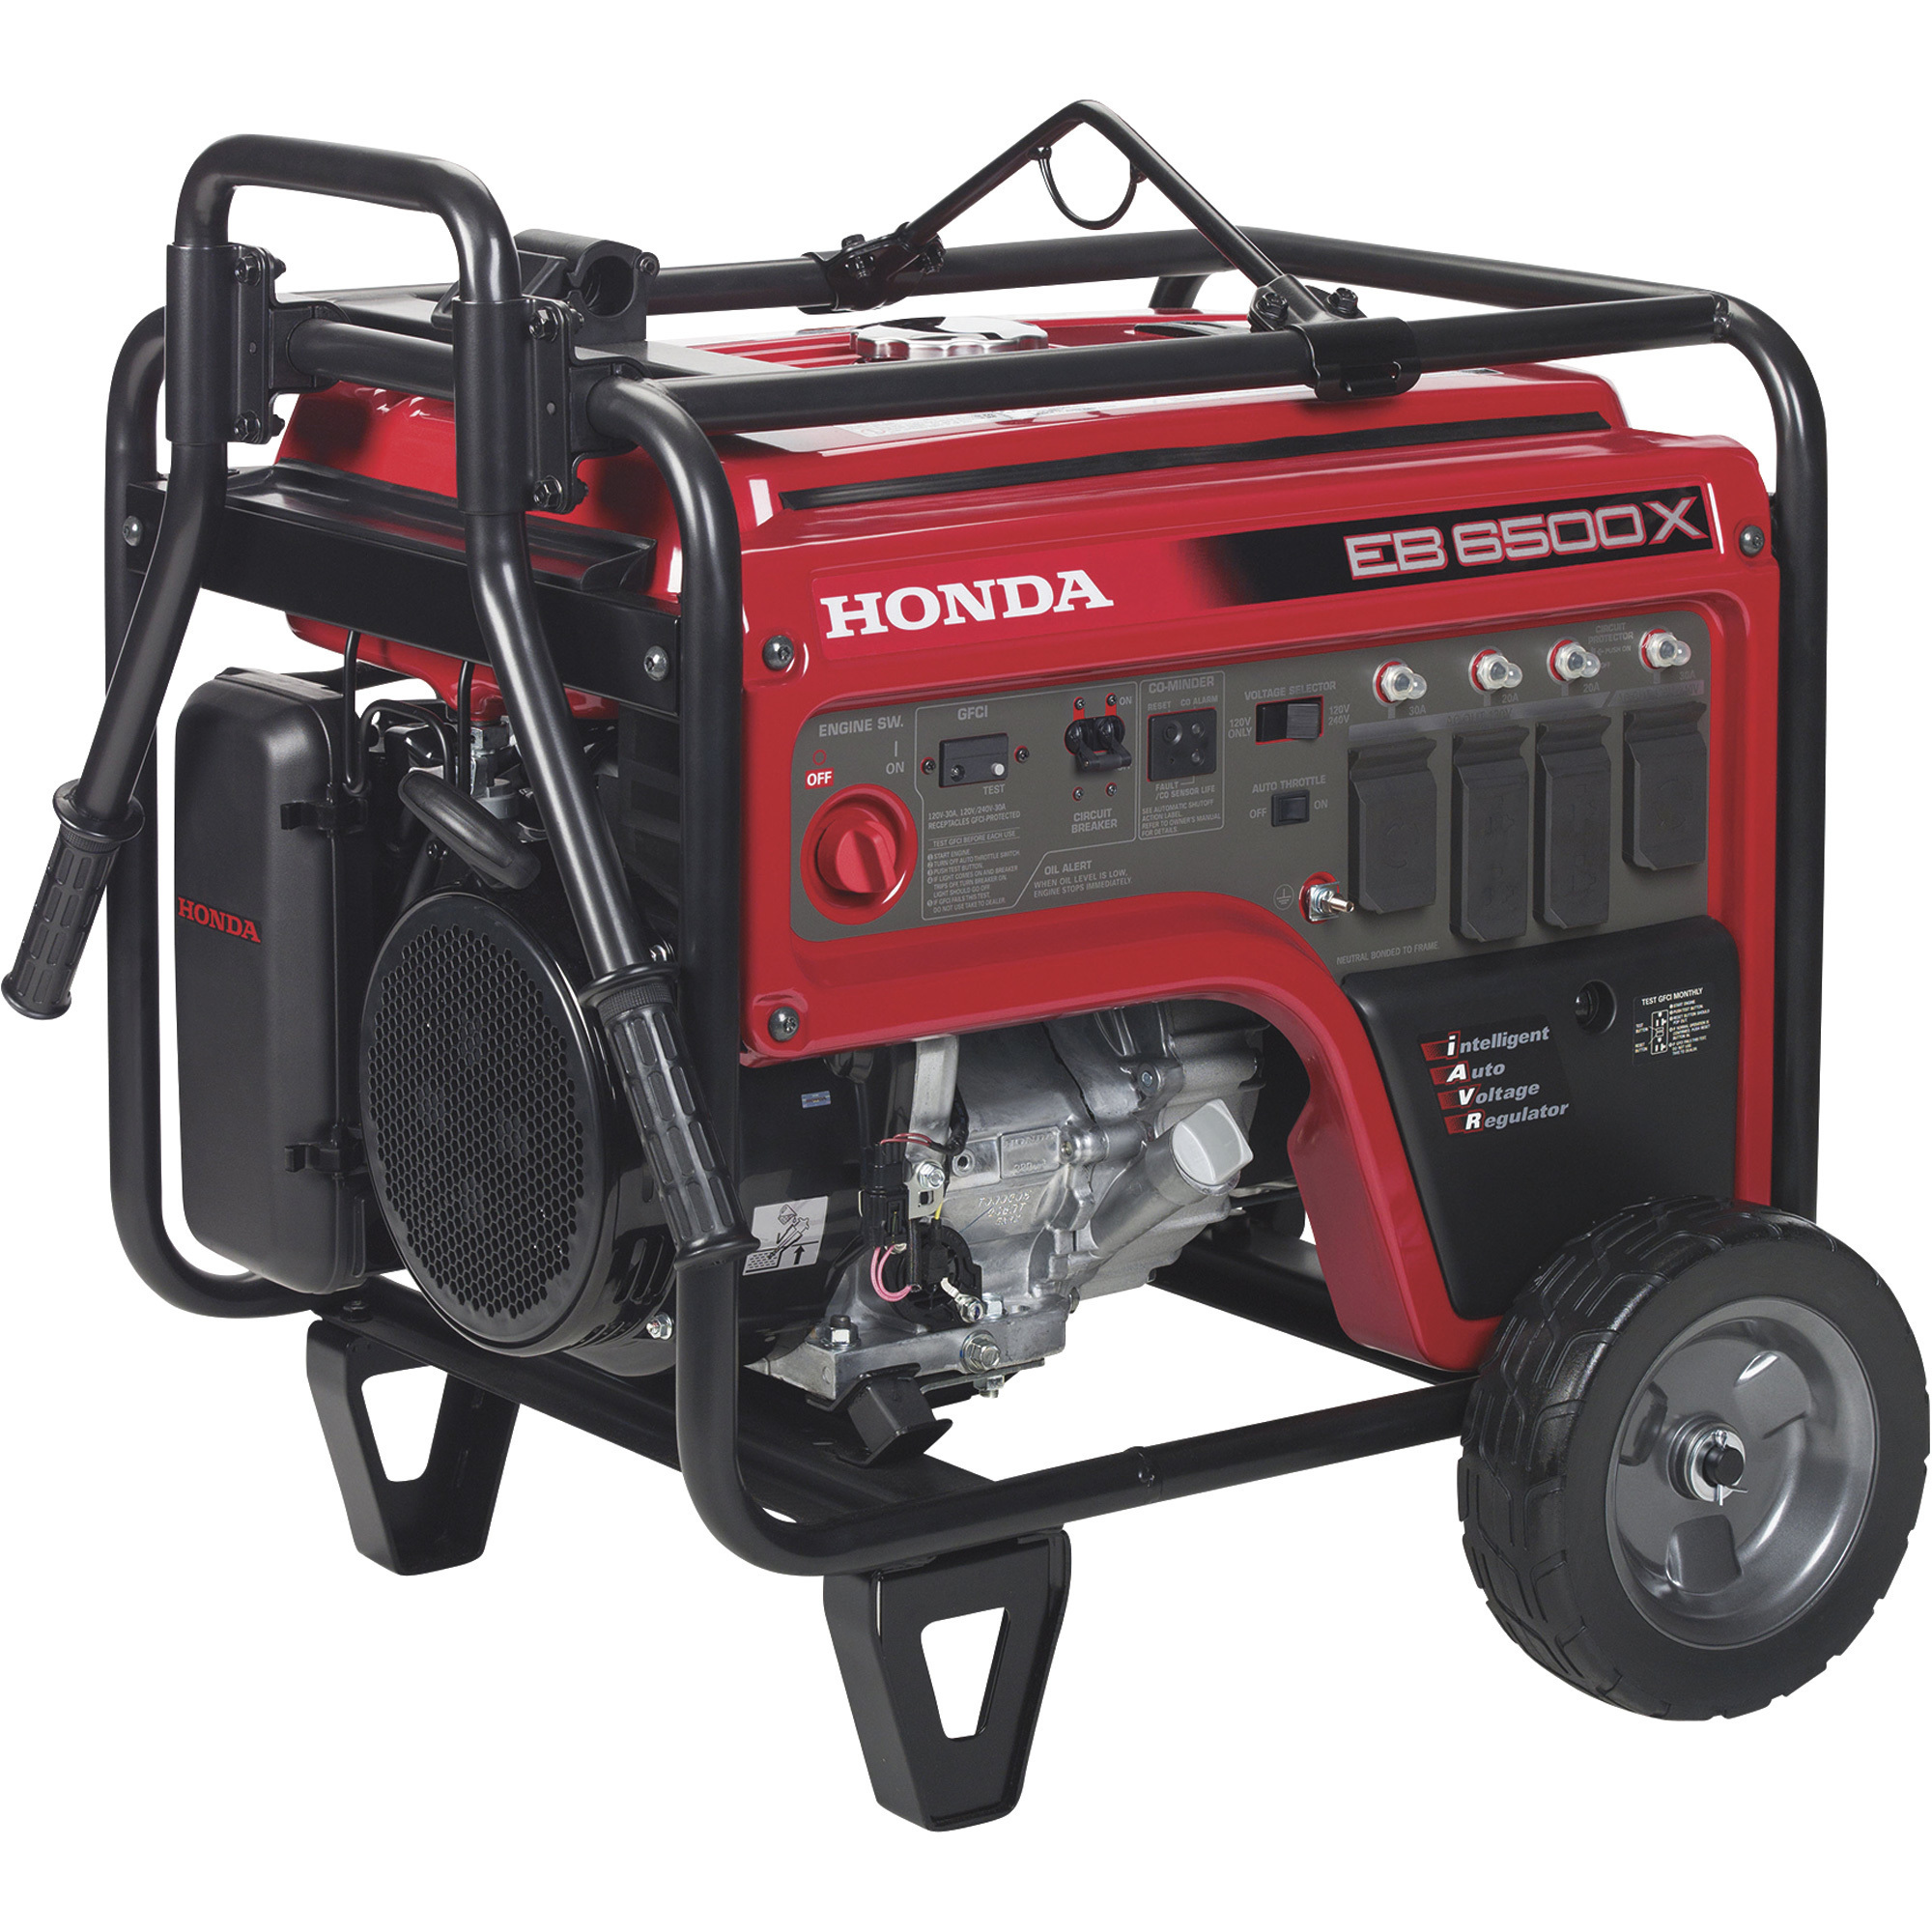 Honda EB6500 iAVR Series Portable Generator, 6500 Surge Watts, 5500 Rated Watts, Model EB6500X1AN